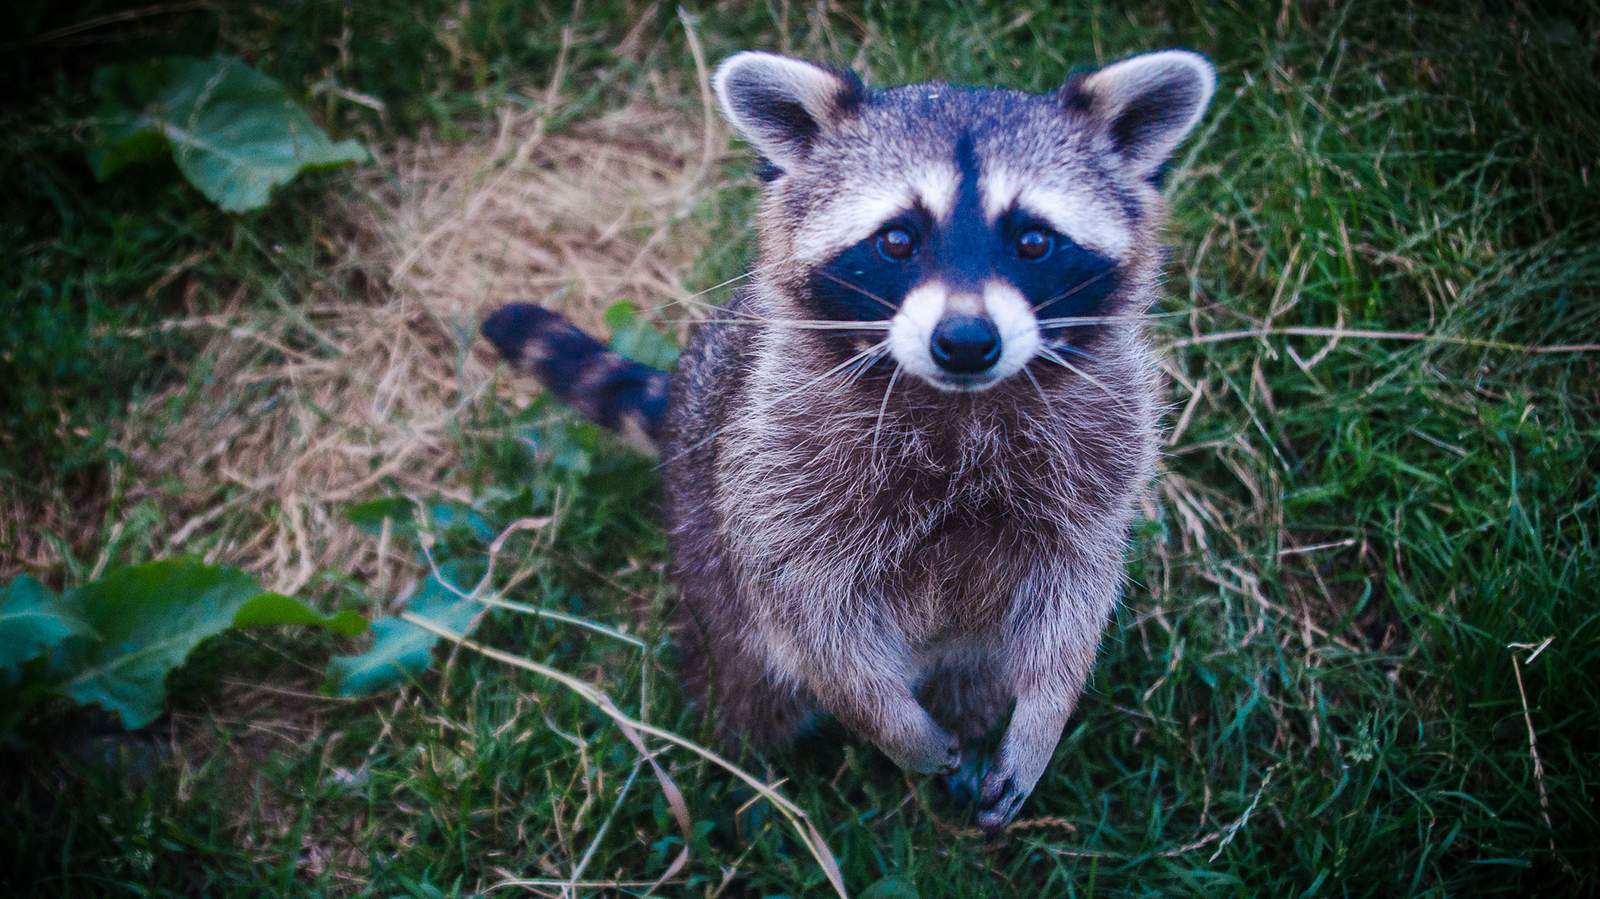 VDH issues warning after rabid raccoon found in Virginia city